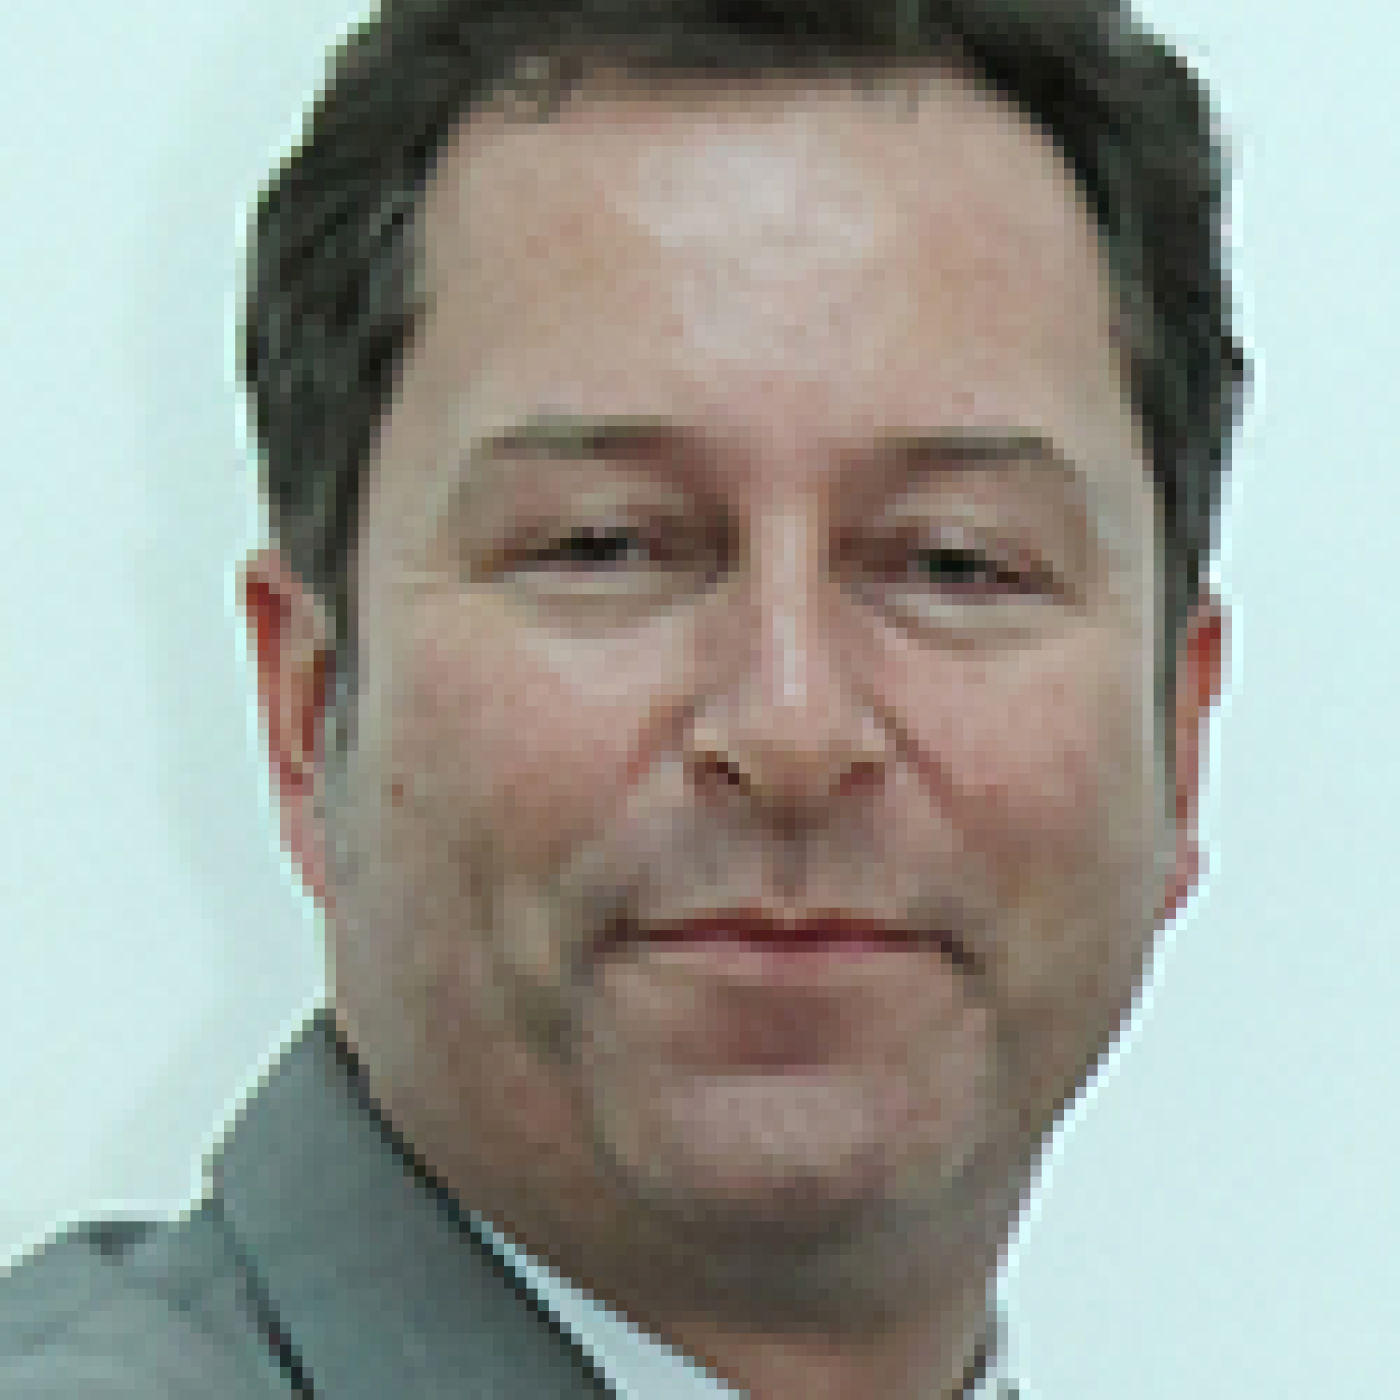 IFES Staff Paul Guerin